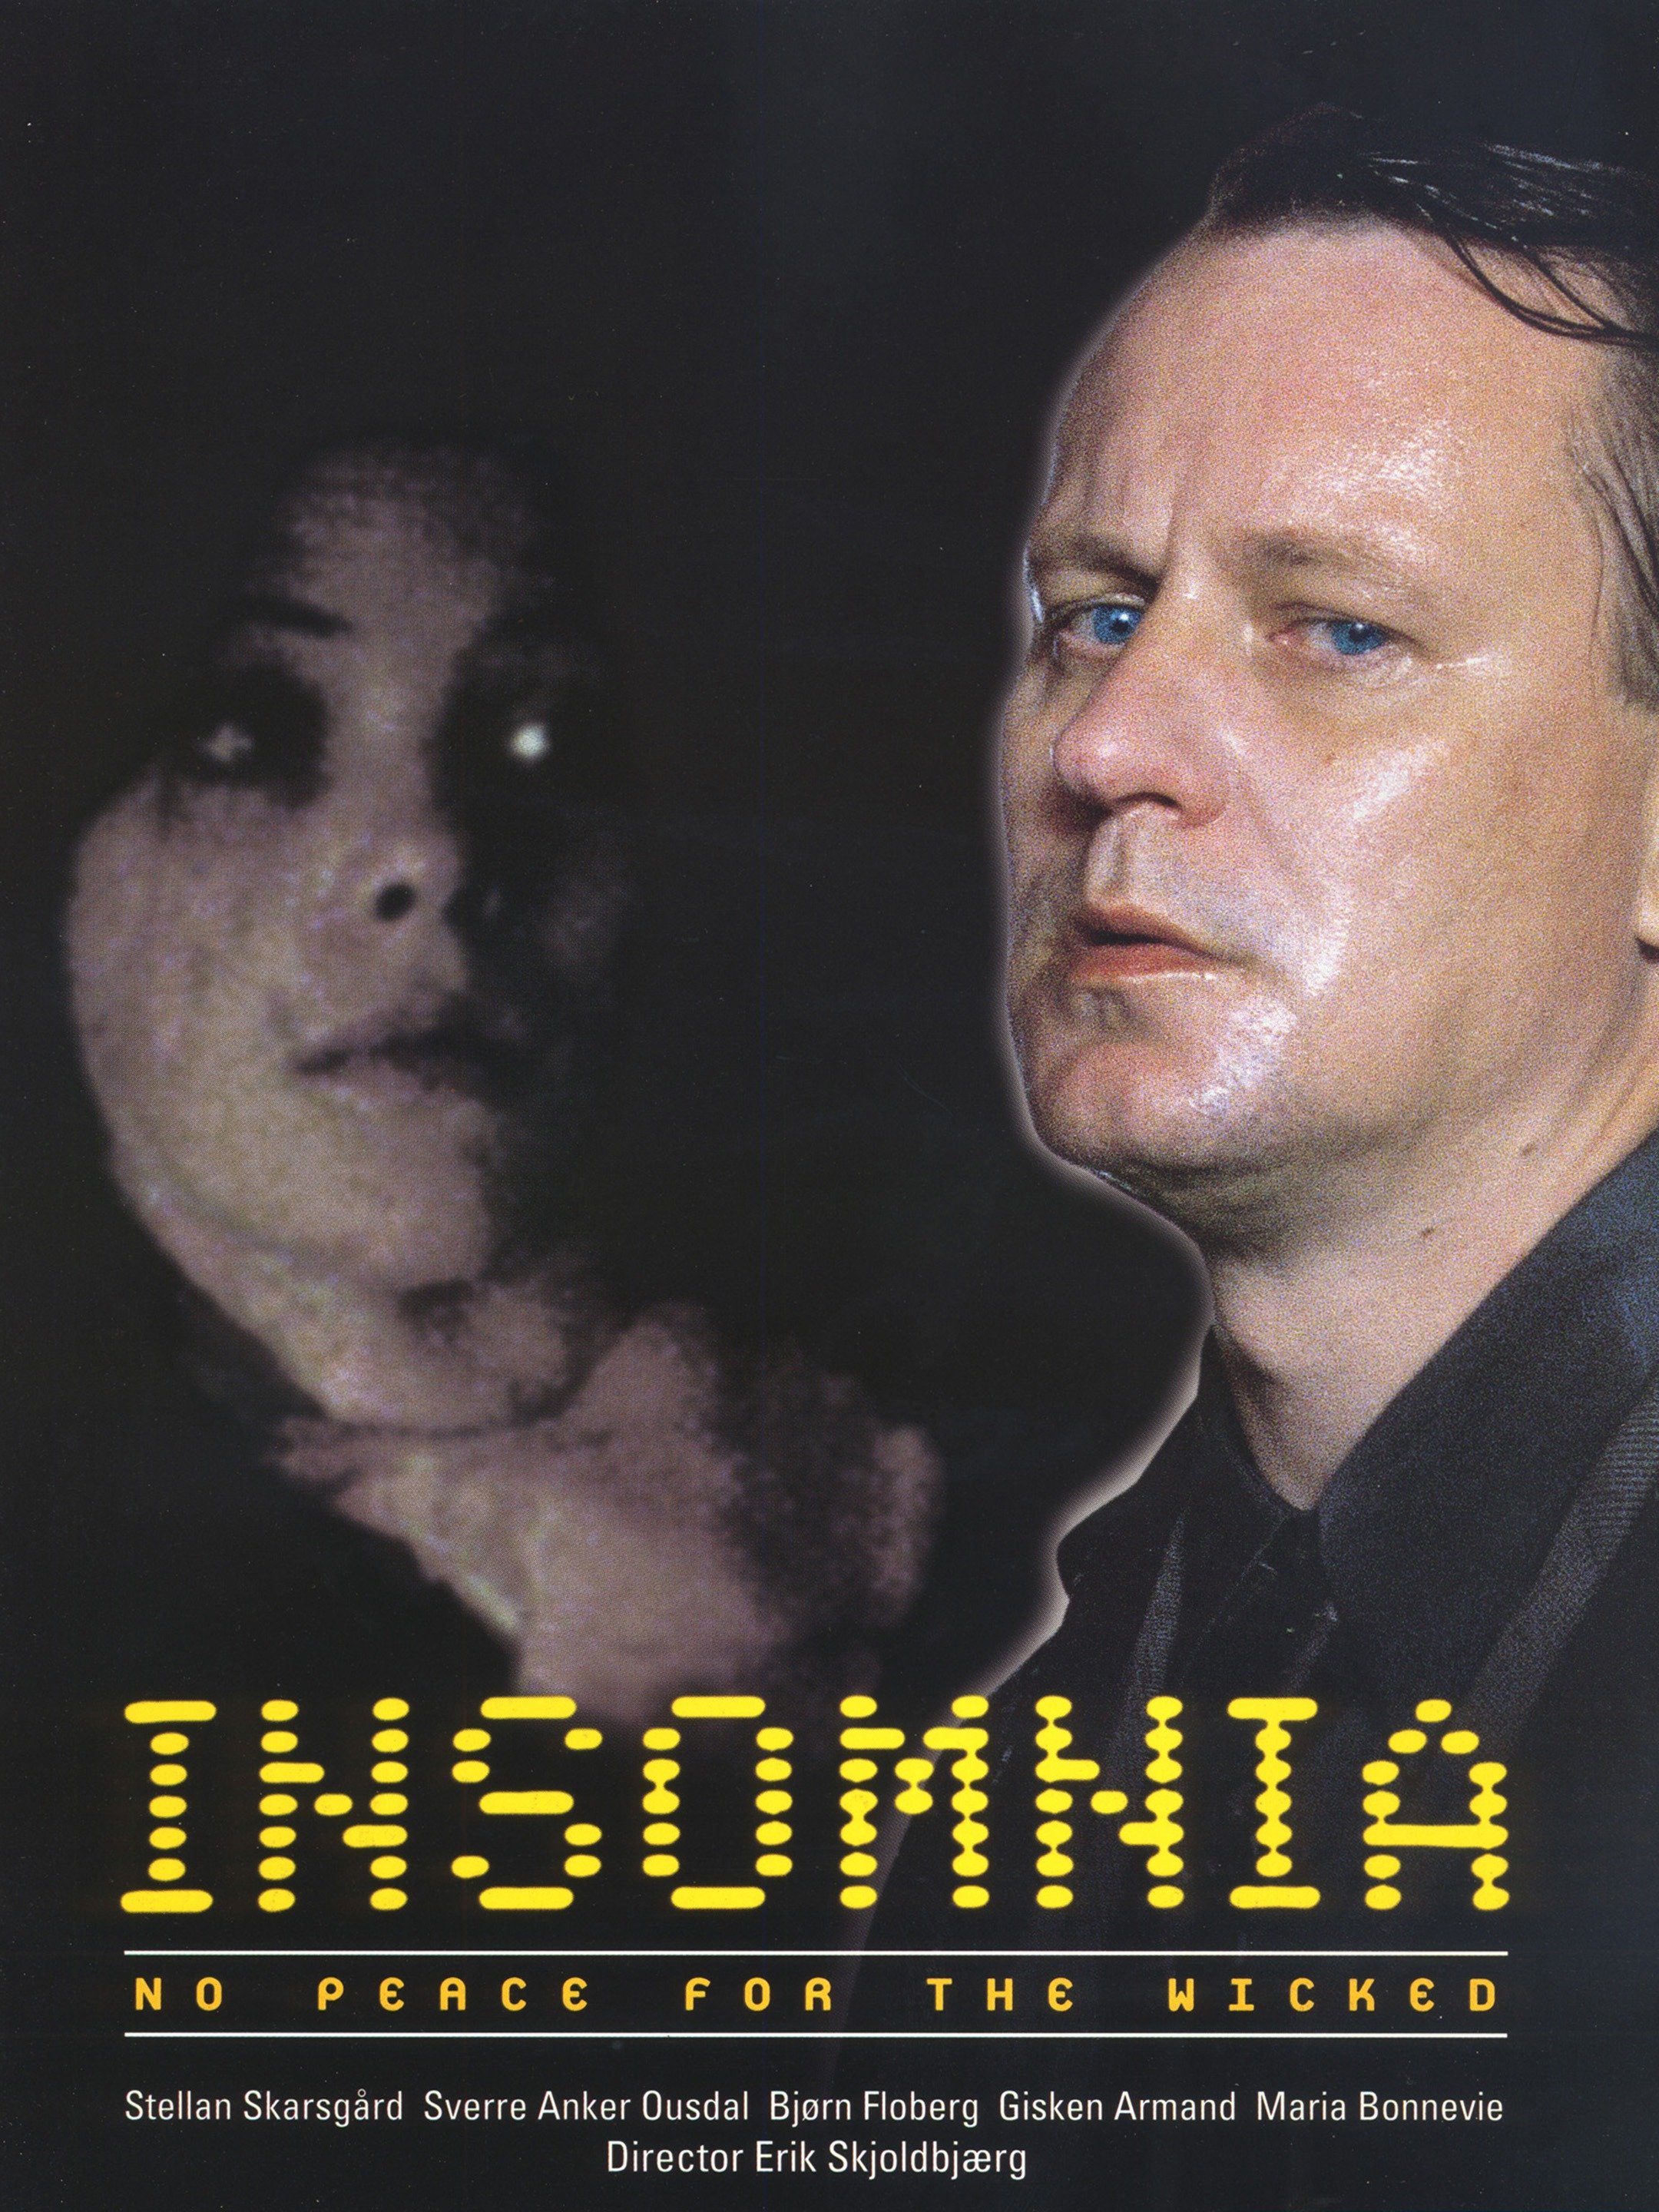 insomnia film 1997 streaming